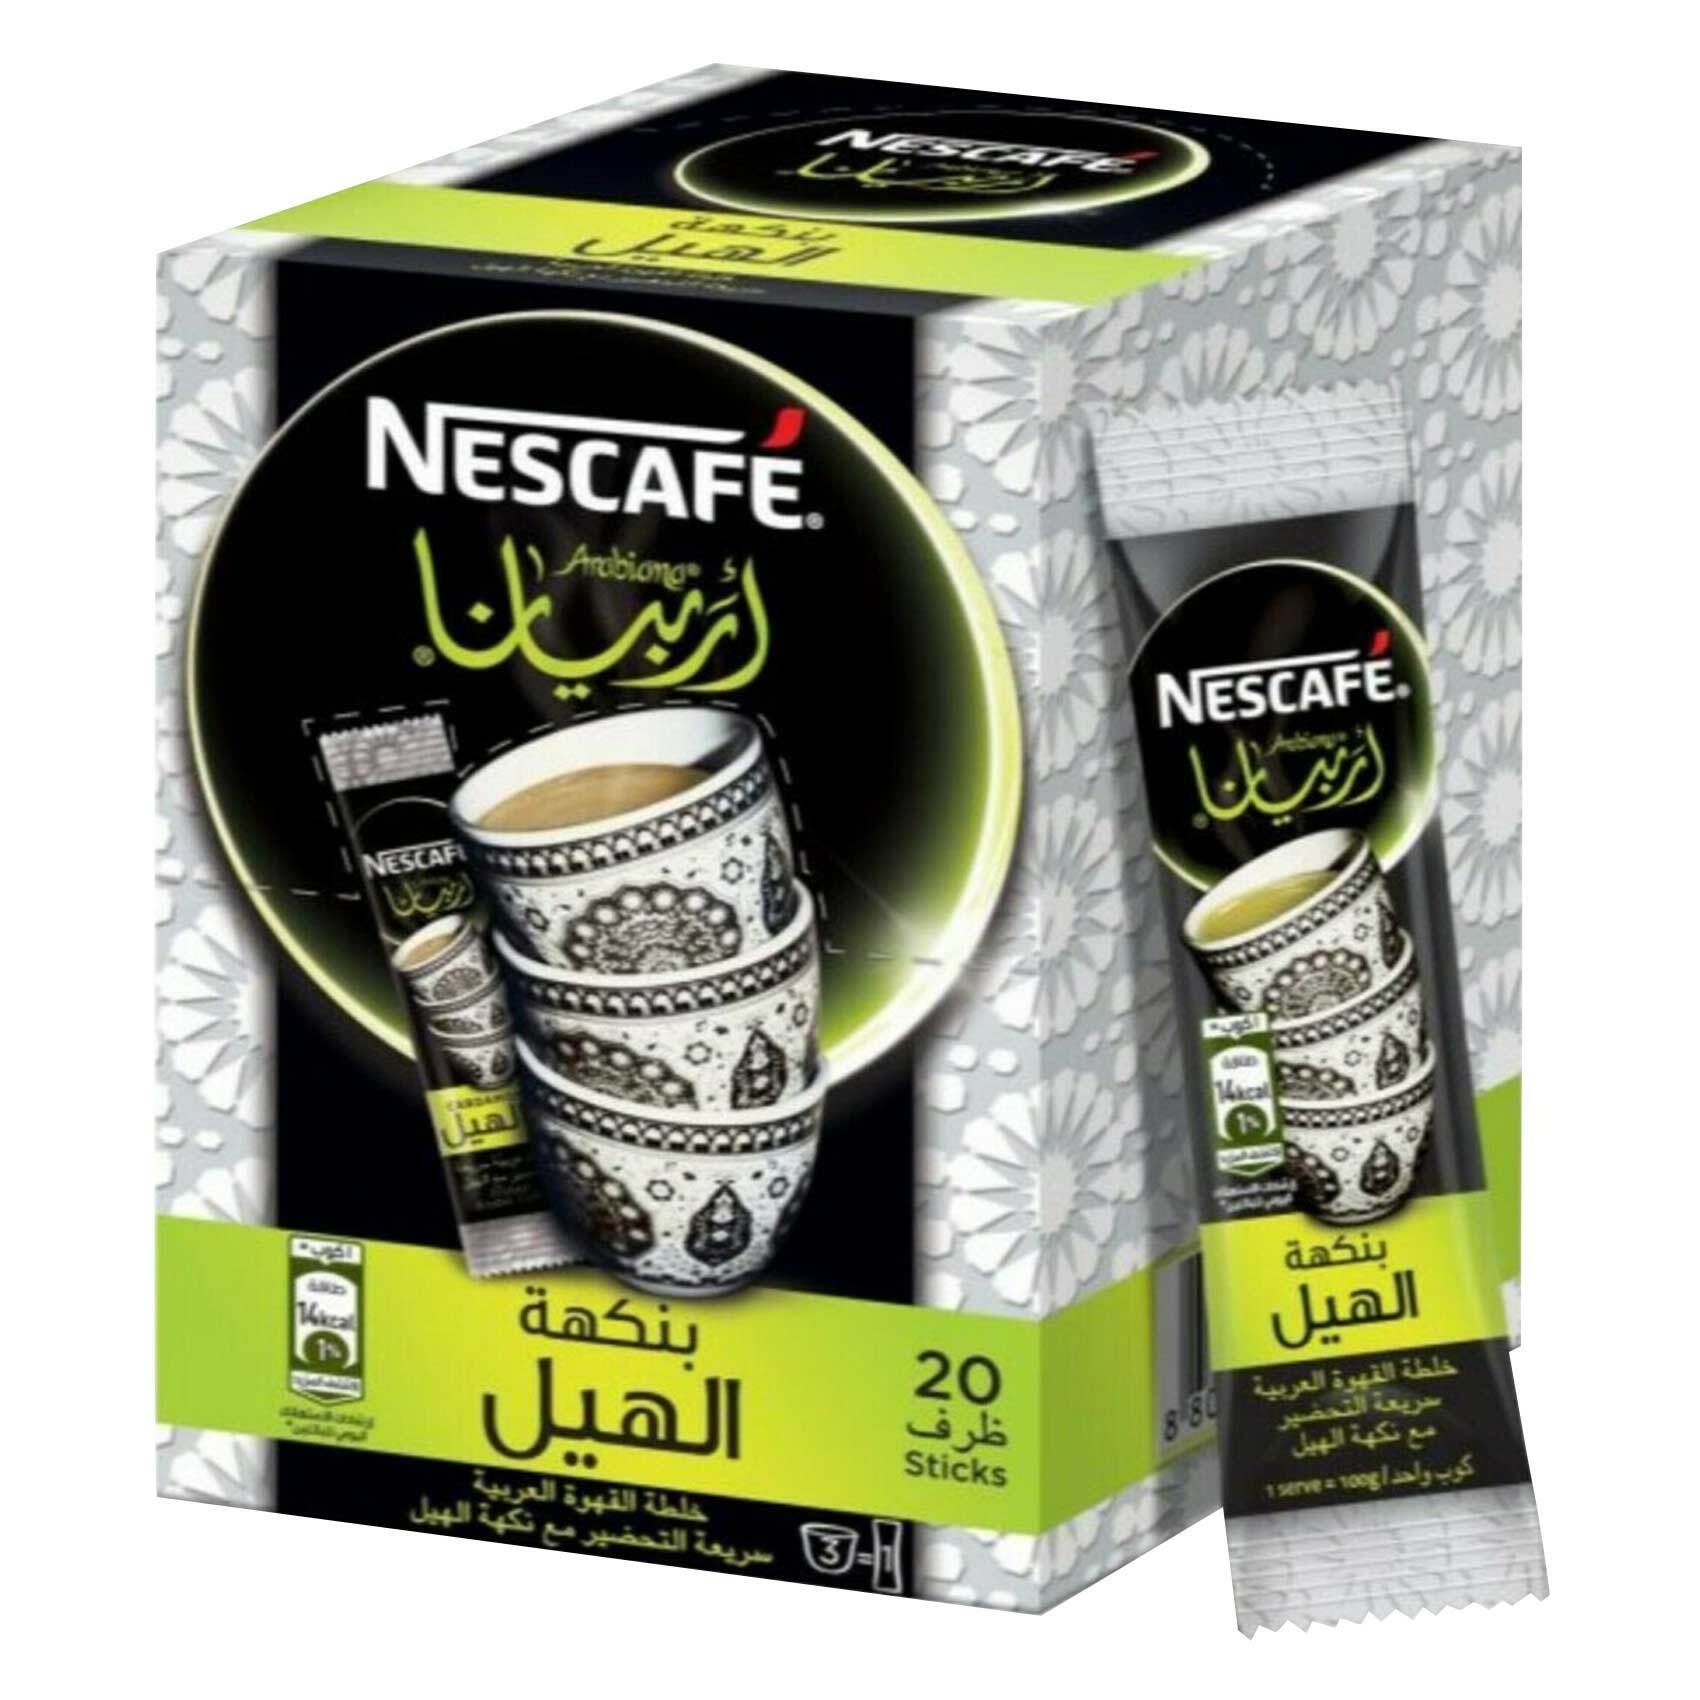 جعل الحياة حبوب ذرة سطح القمر  Buy Nescafe Arabiana Instant Arabic Coffee With Cardamom 3g Pack of 20  Online - Shop Beverages on Carrefour UAE